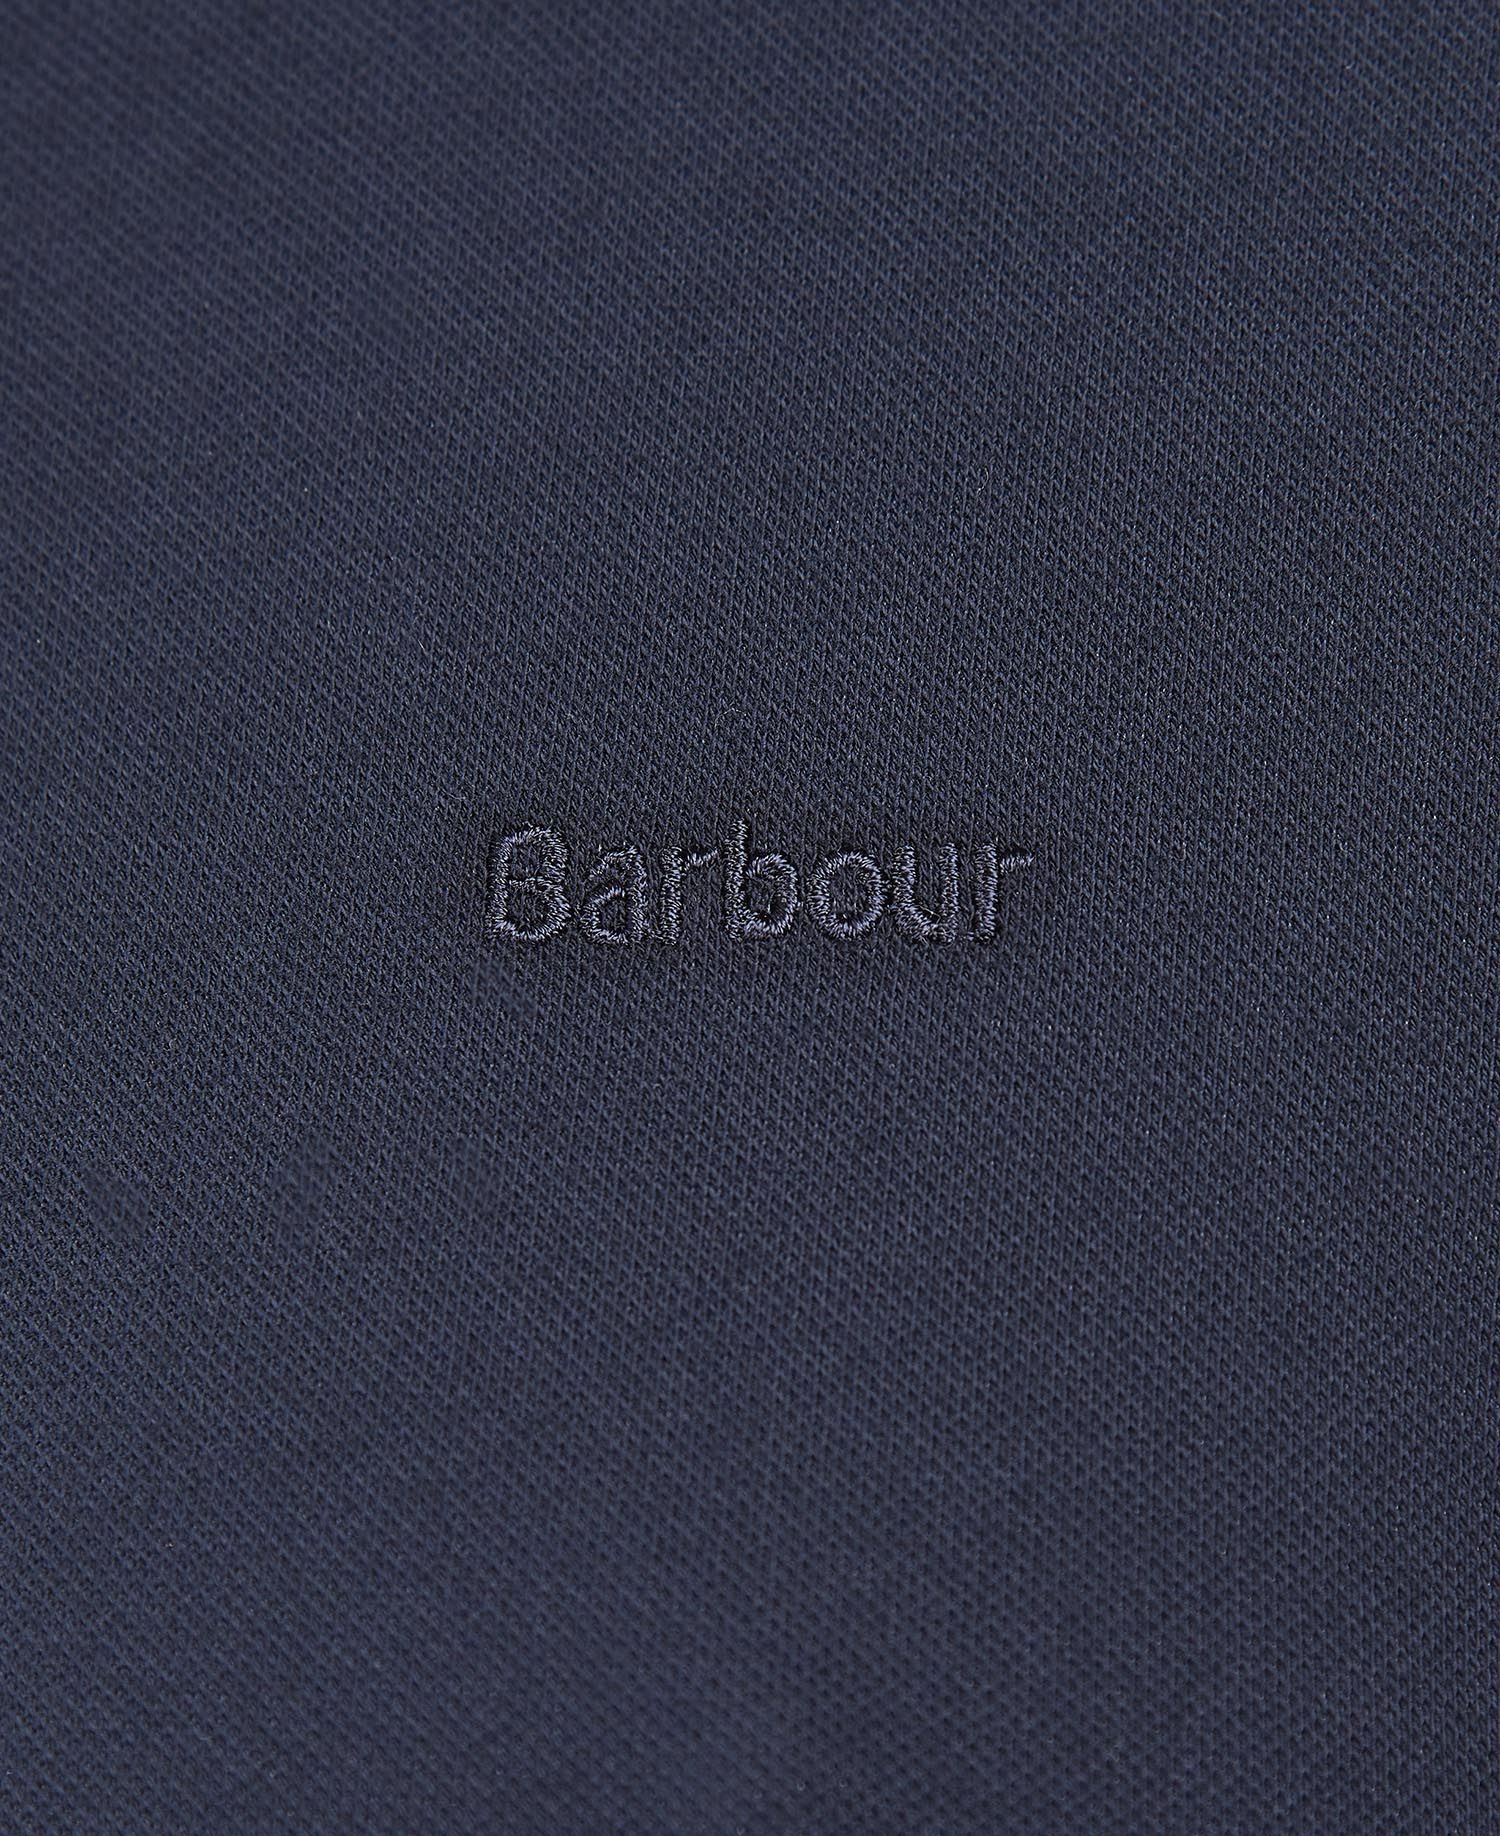 Barbour Portsdown Top - Navy/Silver Birch